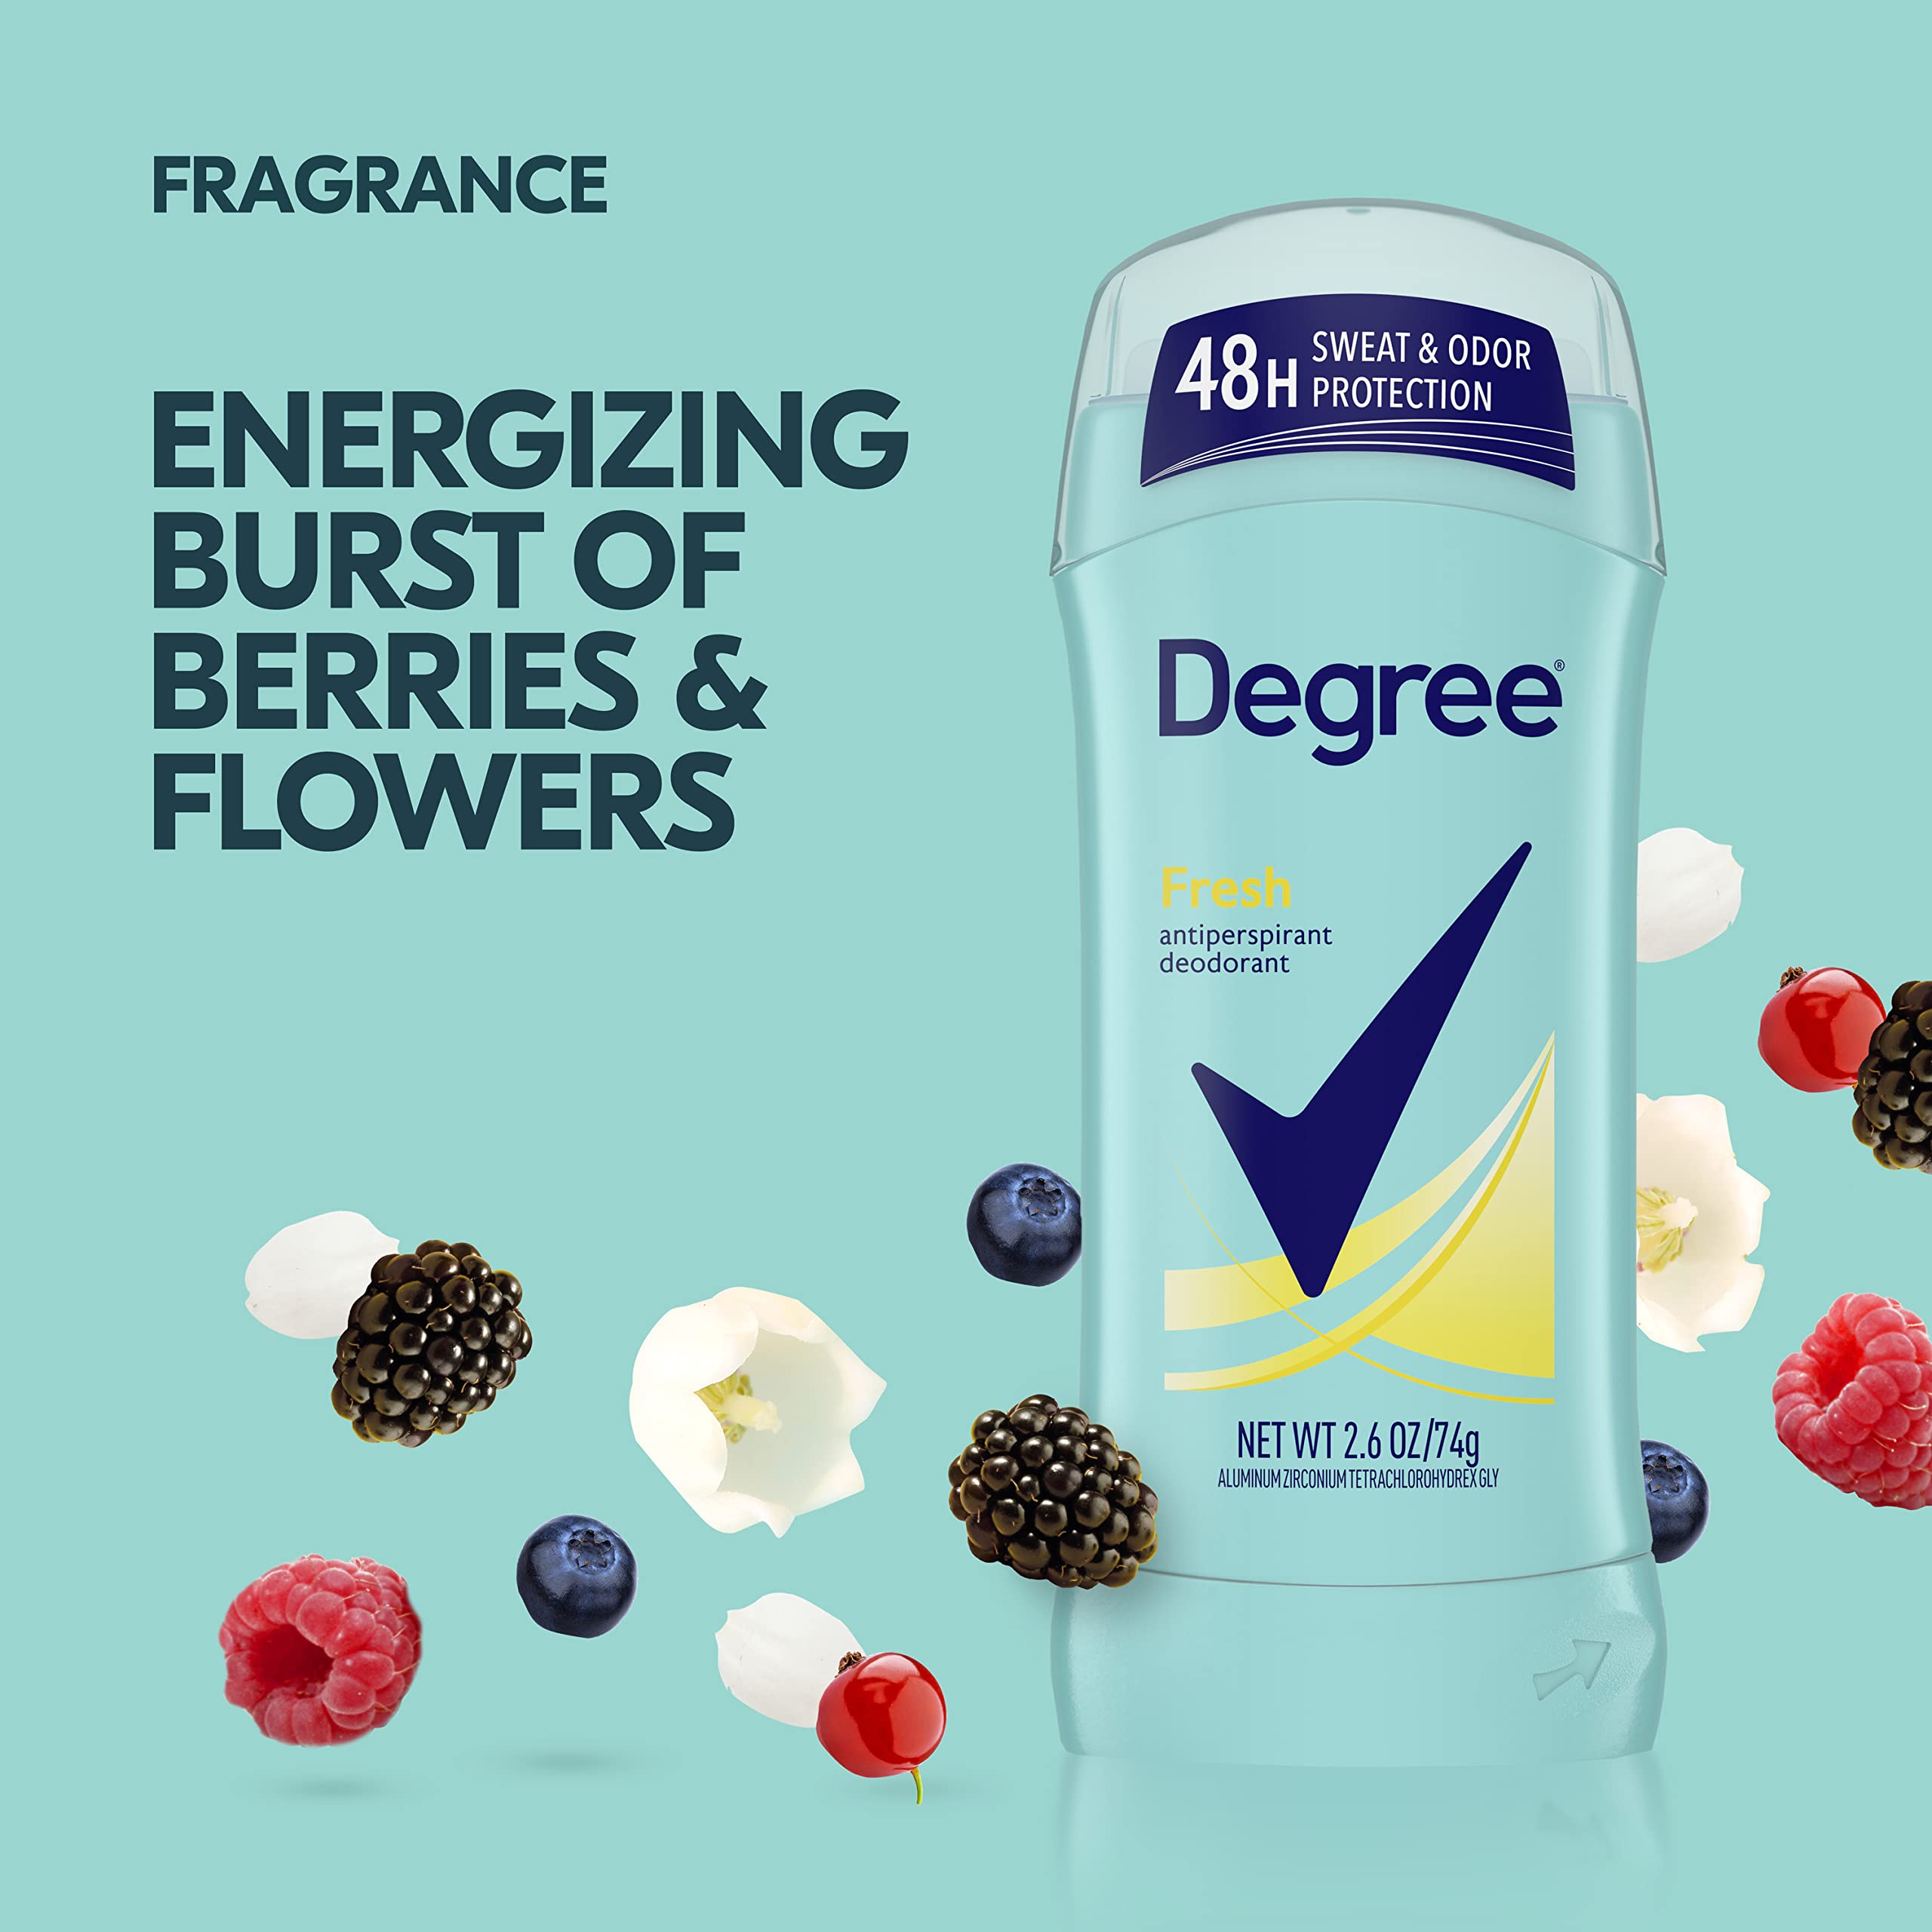 Degree Antiperspirant Deodorant 48-Hour Sweat and Odor Protection Fresh Energy Antiperspirant For Women 2.6 oz, Pack of 6